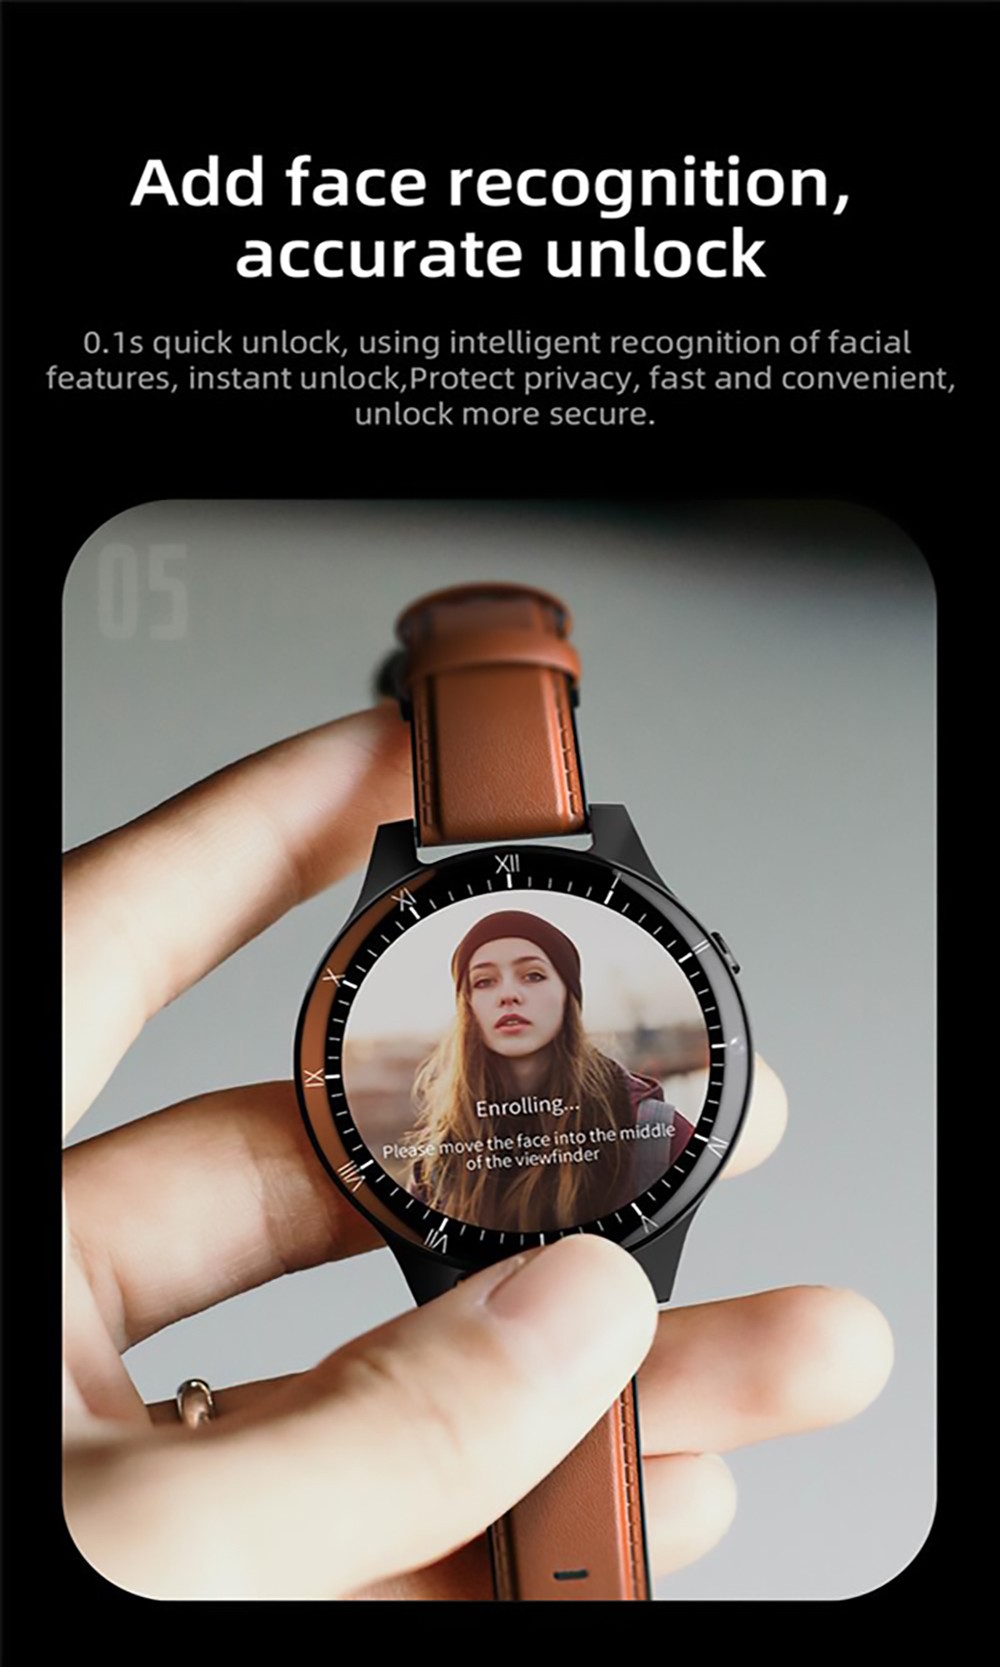 LOKMAT APPLLP PRO 50M Waterproof Smartwatch 4+64G 4G Phone Watch 2.02'' HD Screen Dual Camera  Black